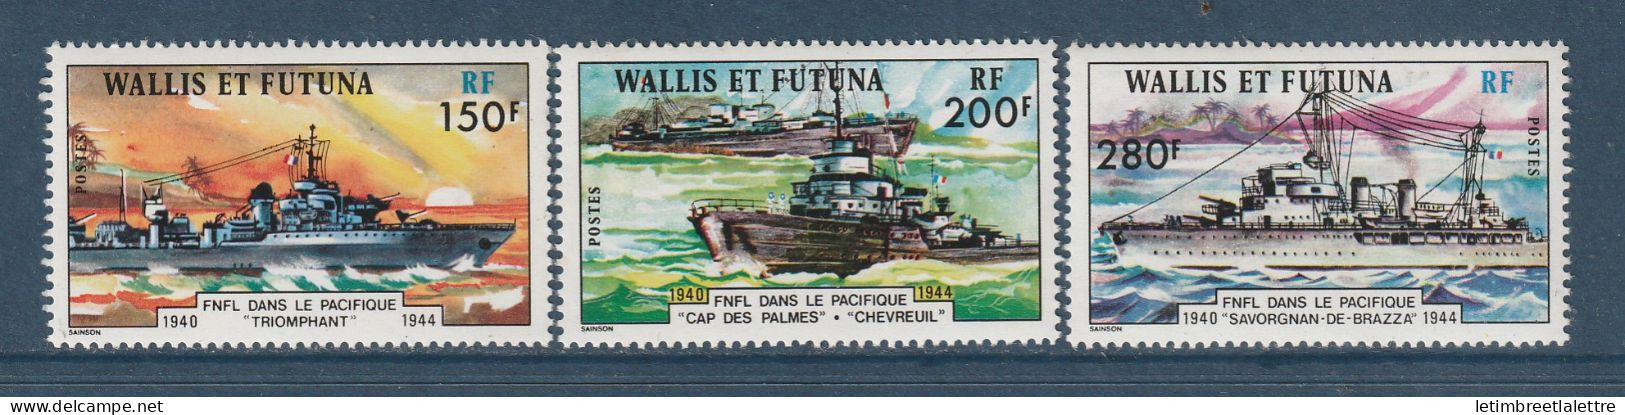 Wallis Et Futuna - YT N° 210 à 212 ** - Neuf Sans Charnière - 1978 - Nuovi